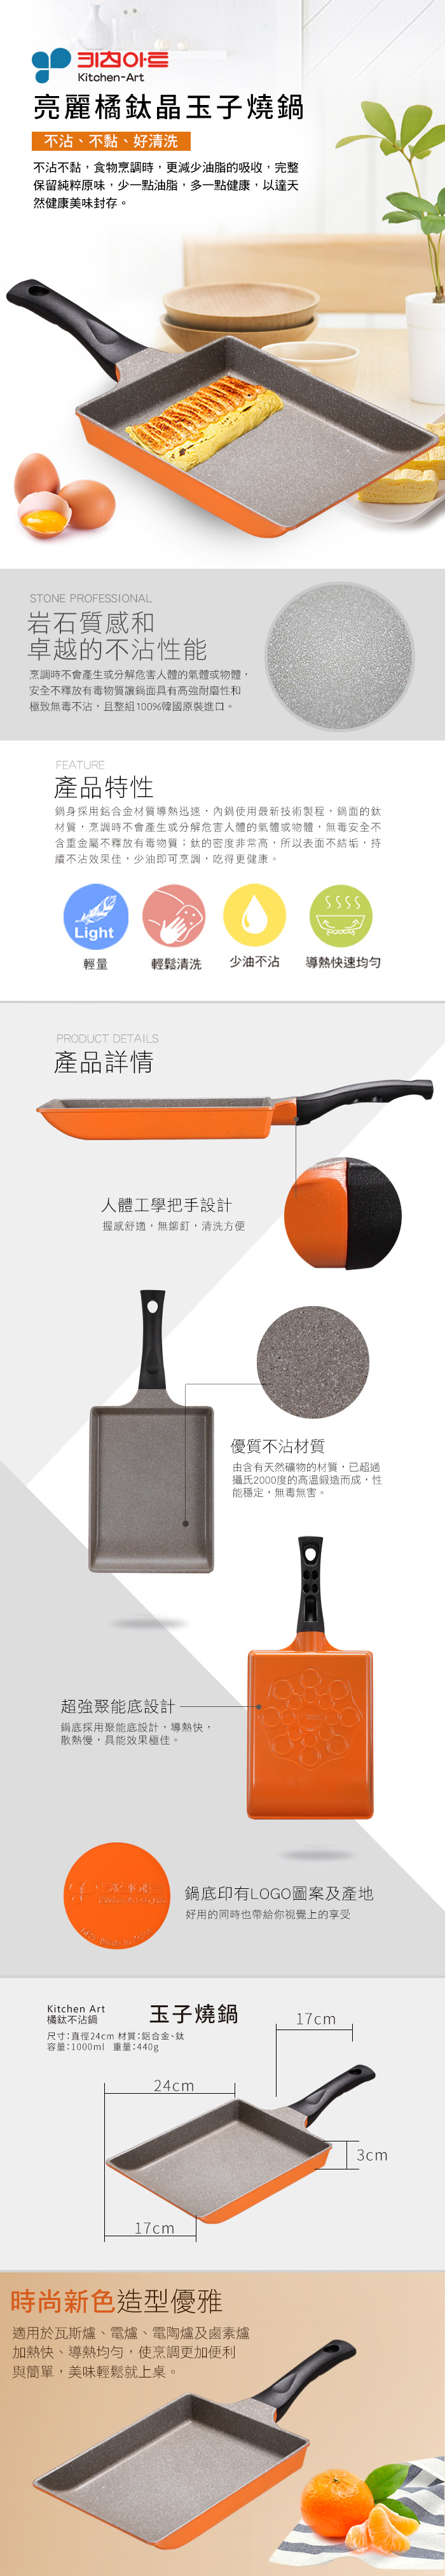 【Kitchen Art】橘鈦晶石玉子燒鍋-24cm